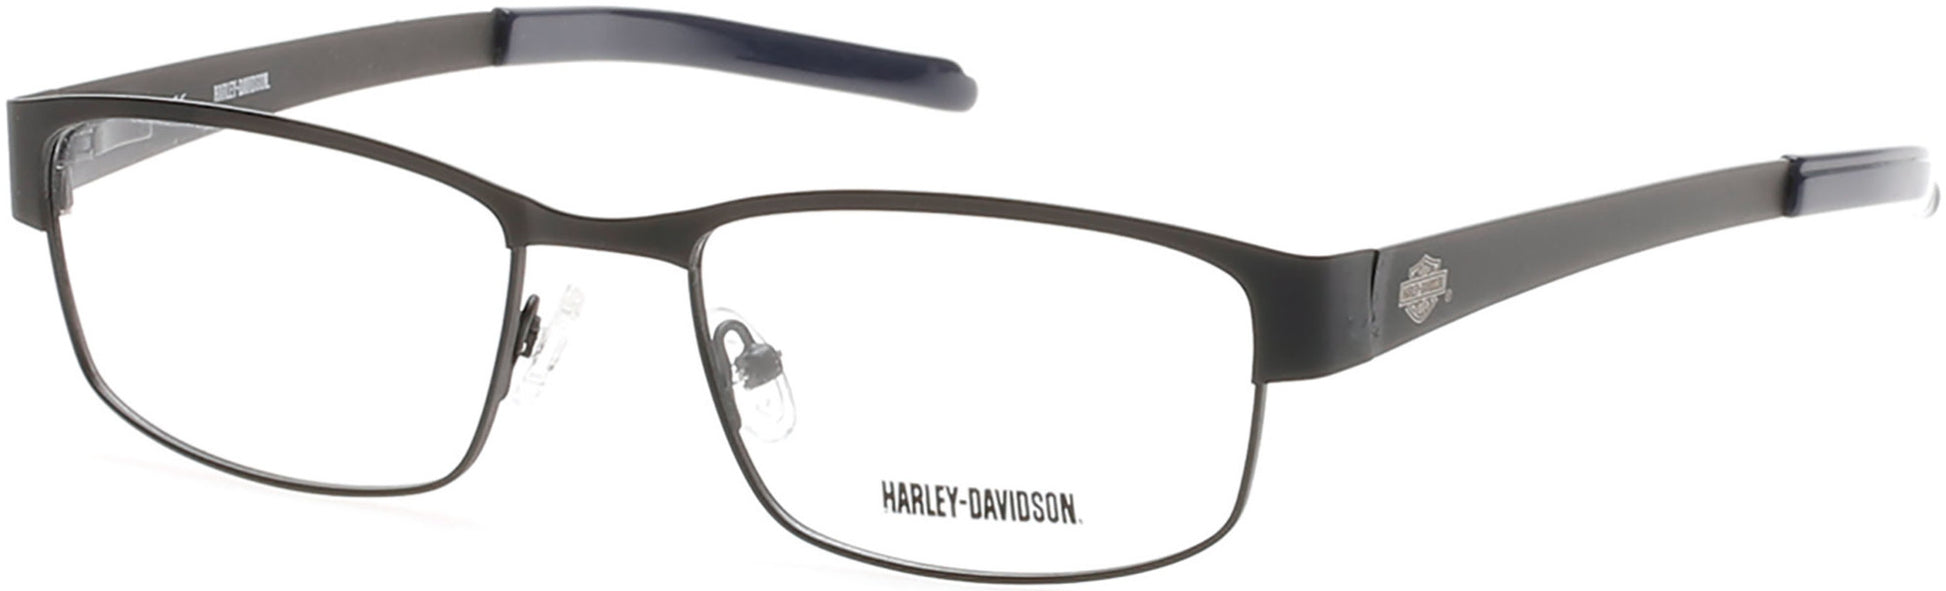 Harley-Davidson HD0721 Eyeglasses B84-B84 - Black